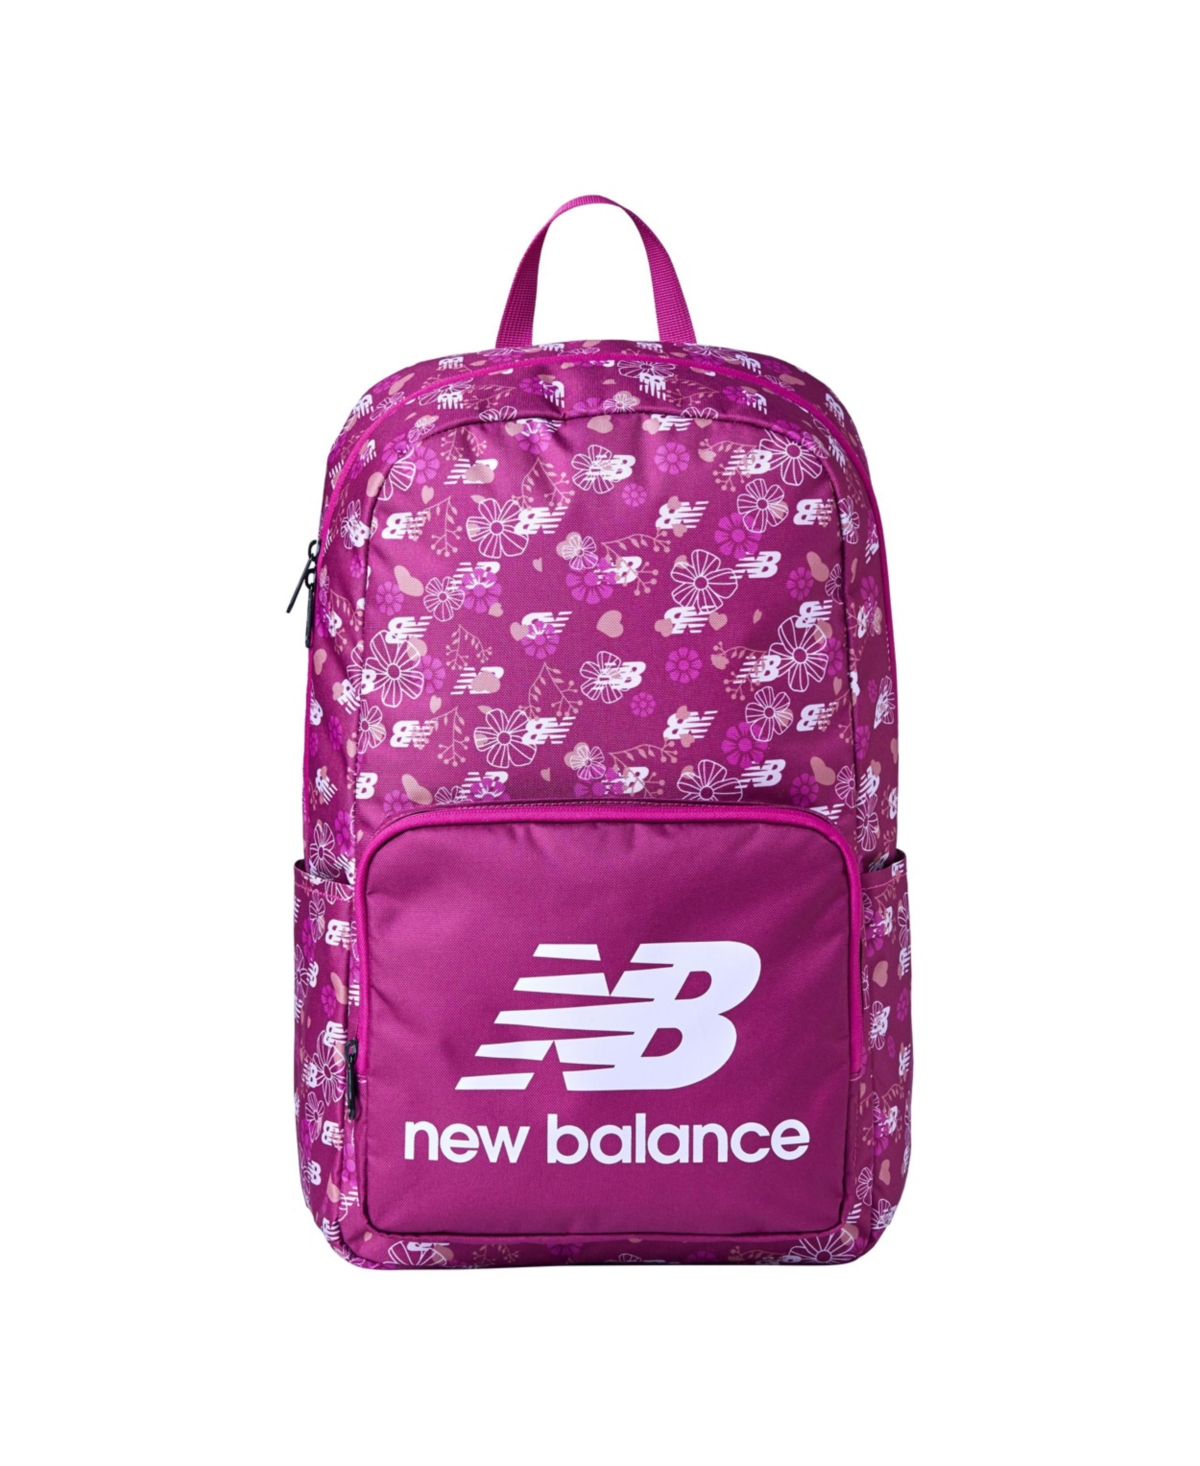 New Balance Kids Printed Backpack In Purple